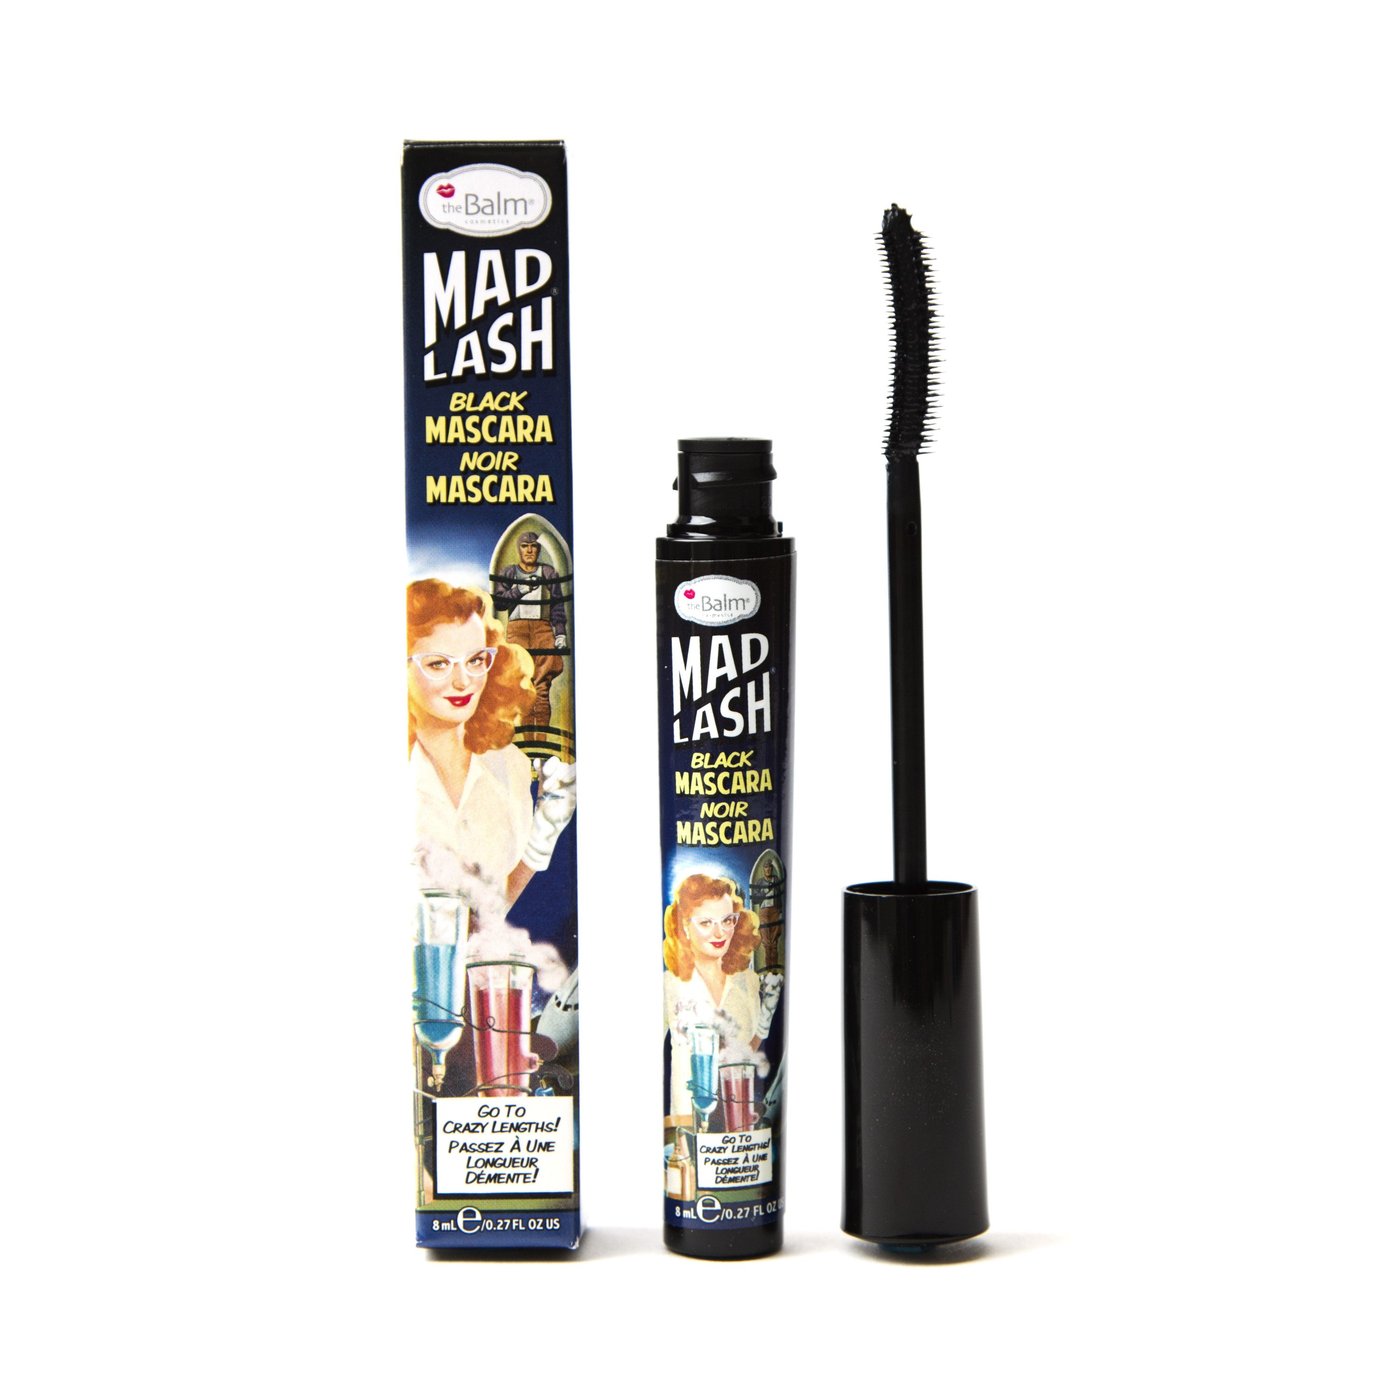 the balm mad lash mascara comb or brush